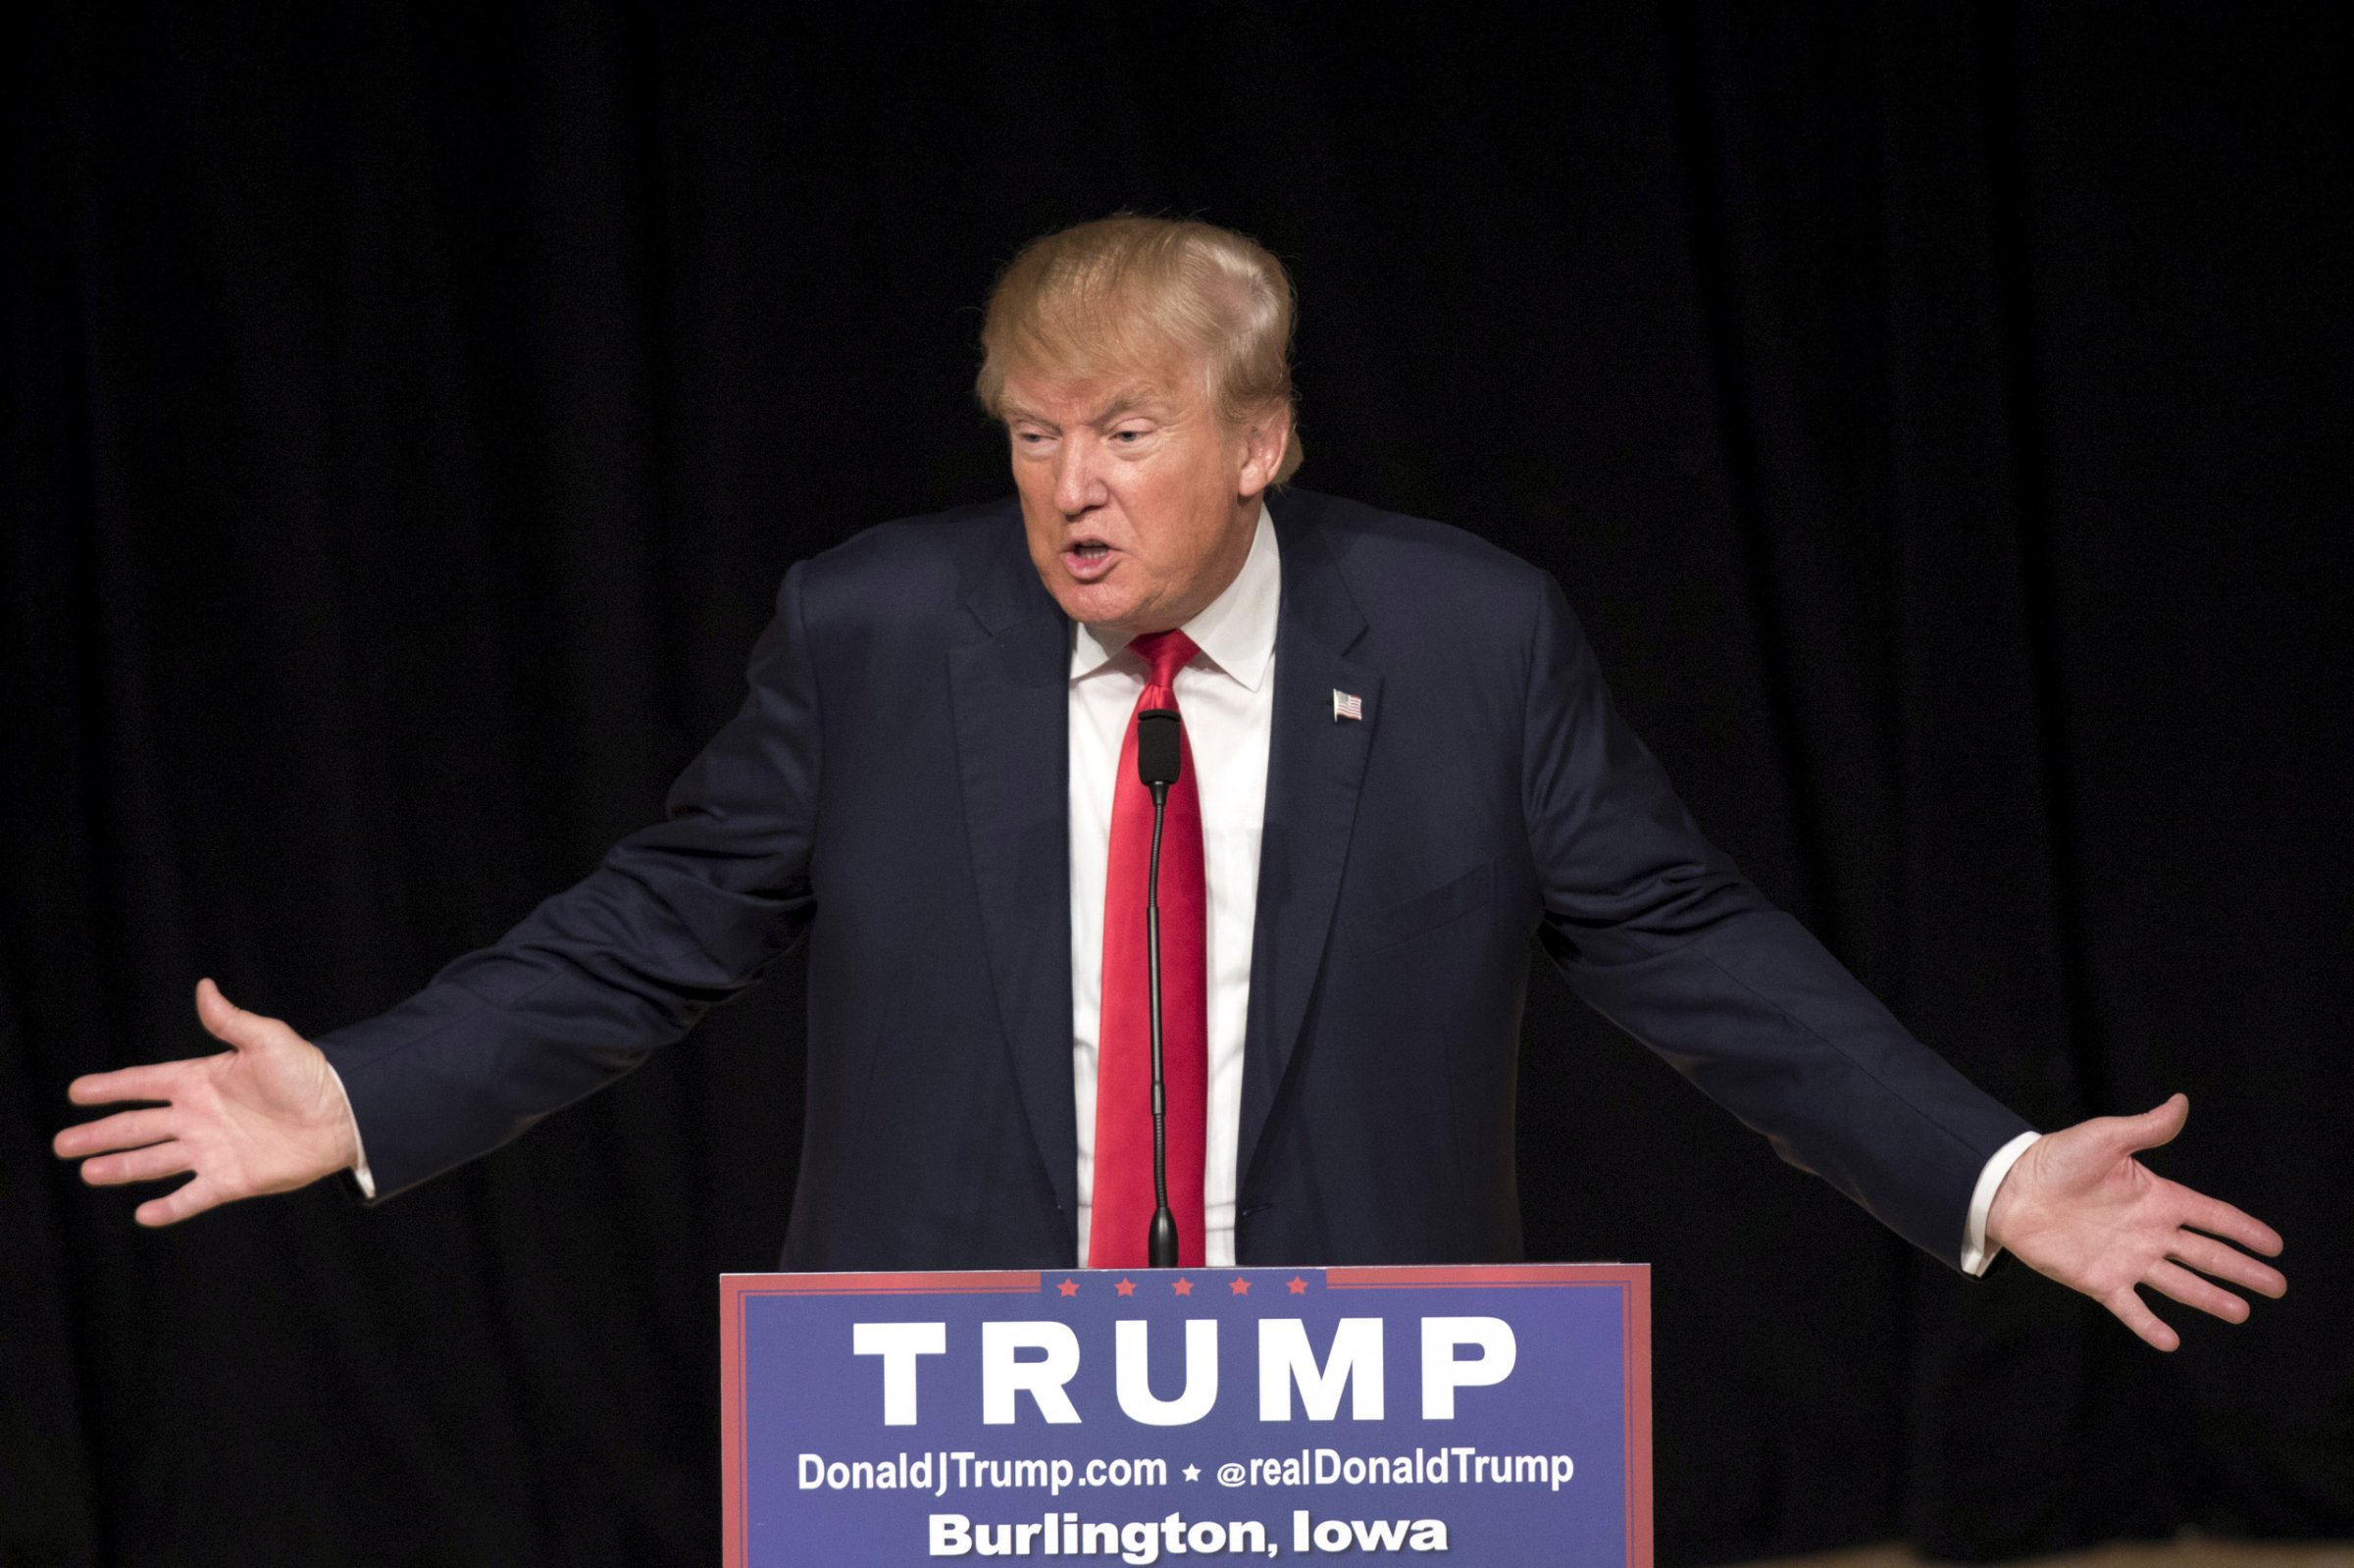 Republican presidential candidate Donald Trump speaks during a campaign rally at Burlington Memorial Auditorium in Burlington, Iowa, October 21, 2015. REUTERS/Scott Morgan - RTS5JYH